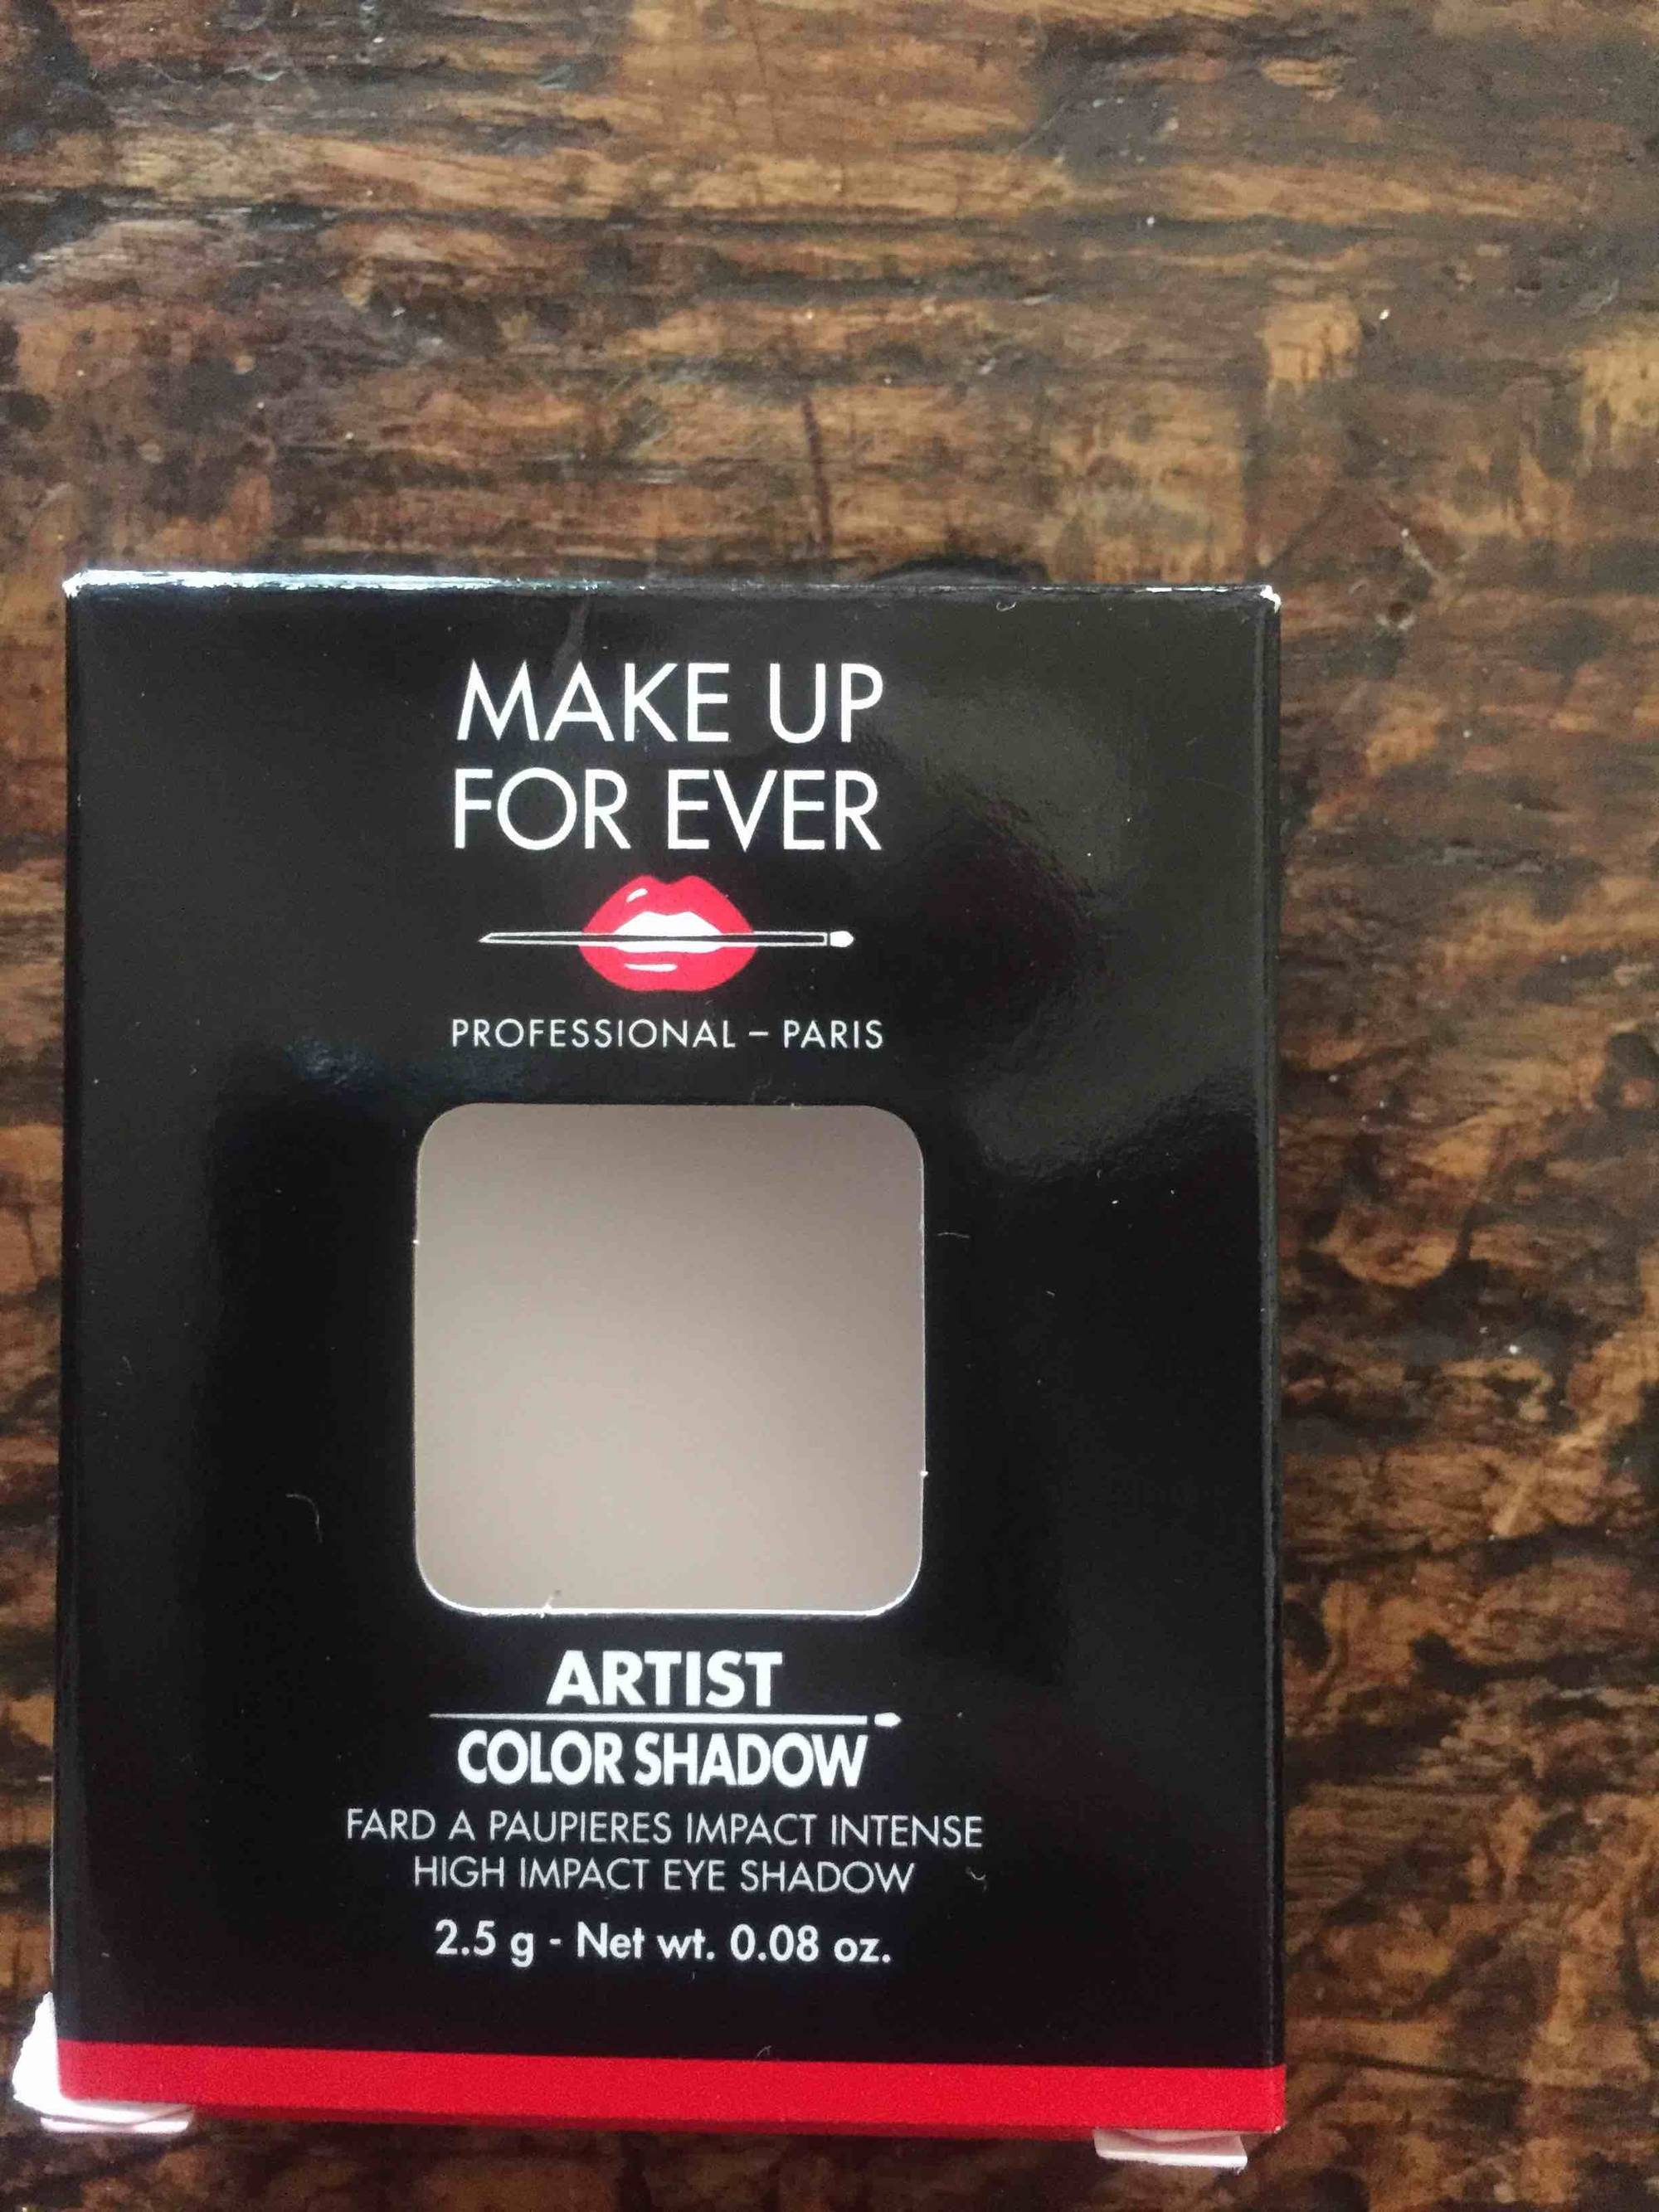 MAKE UP FOR EVER - Artist color shadow - Fard à paupières impact intense